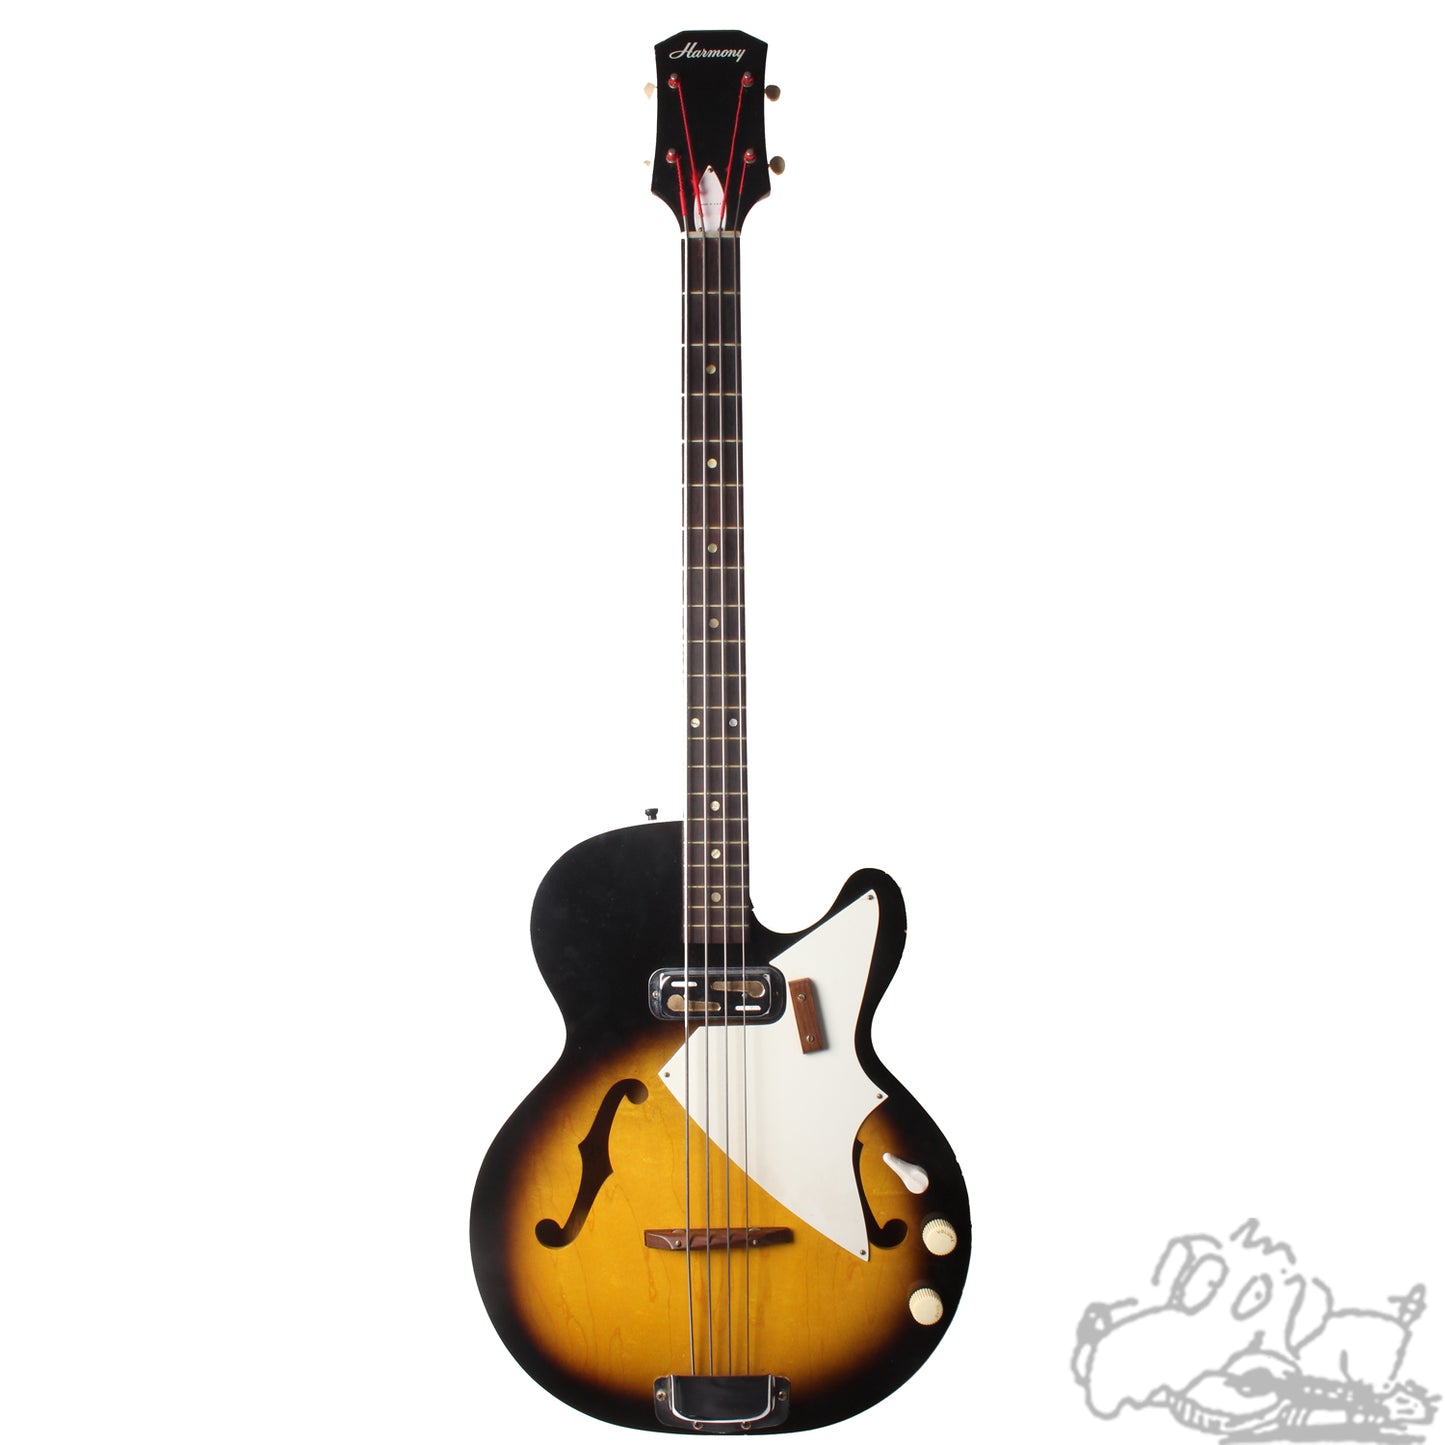 1965 Harmony H-22 Bass